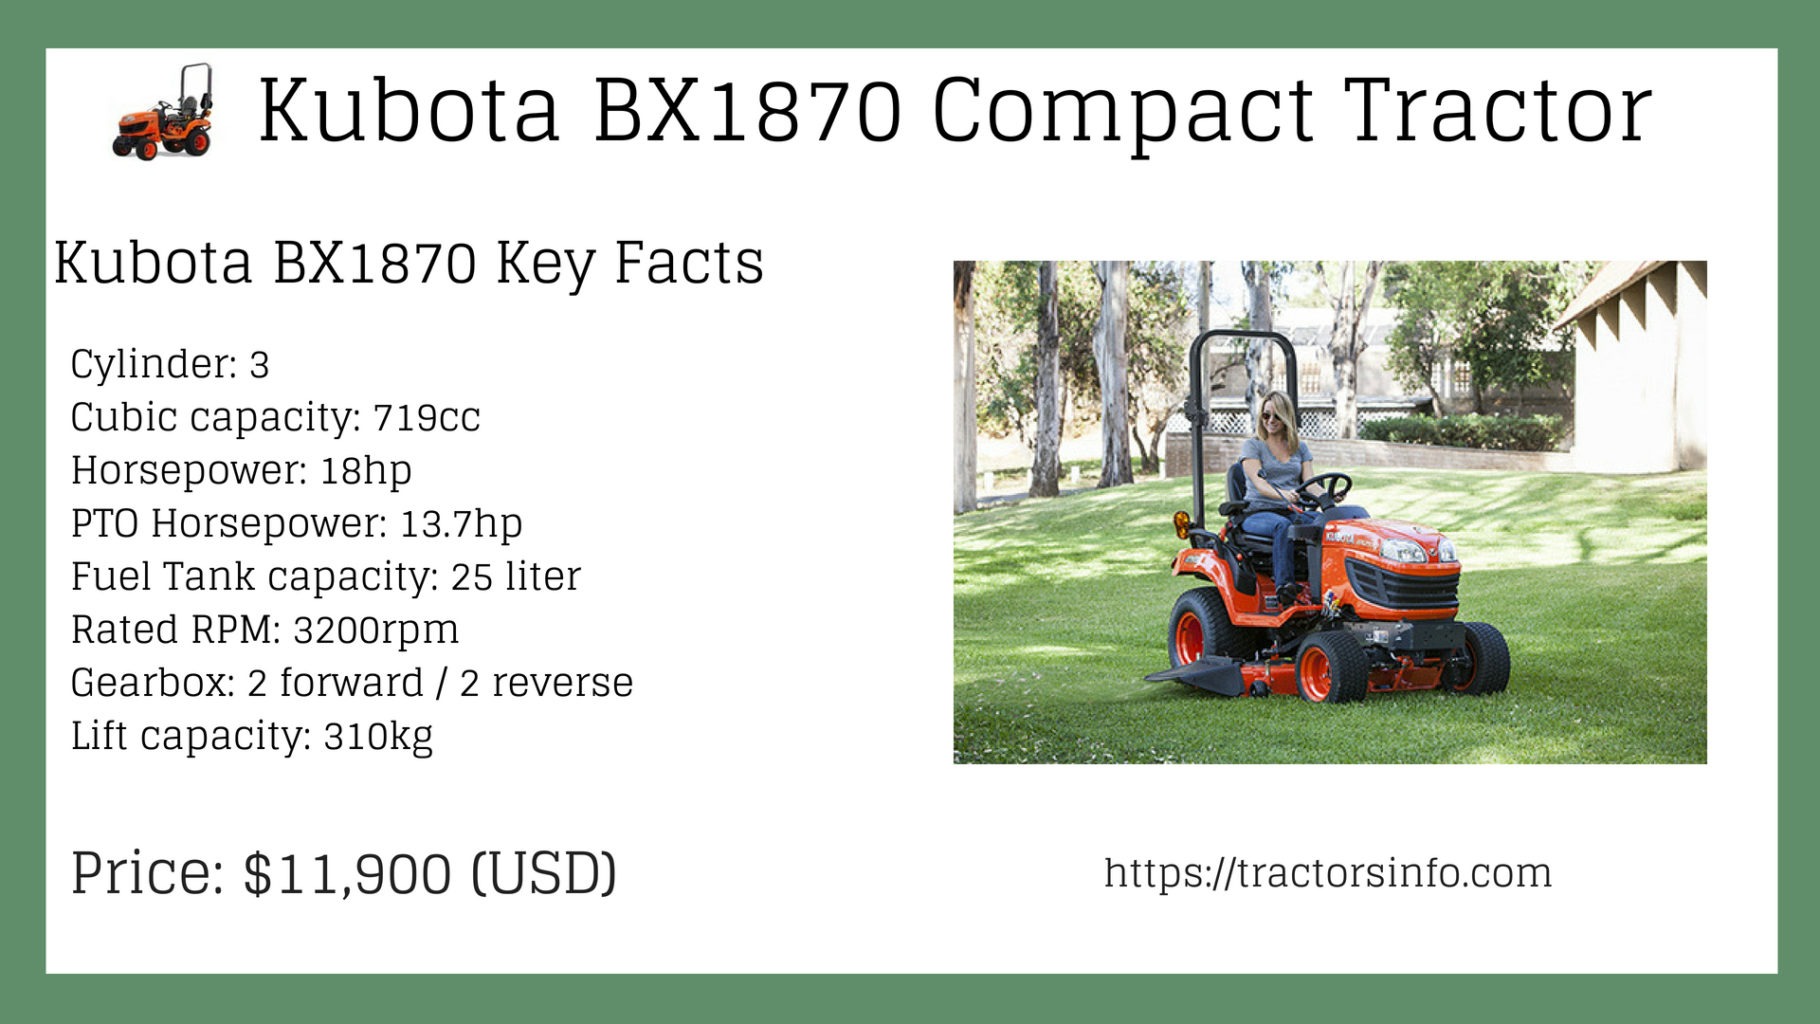 Kubota BX1870 compact tractor